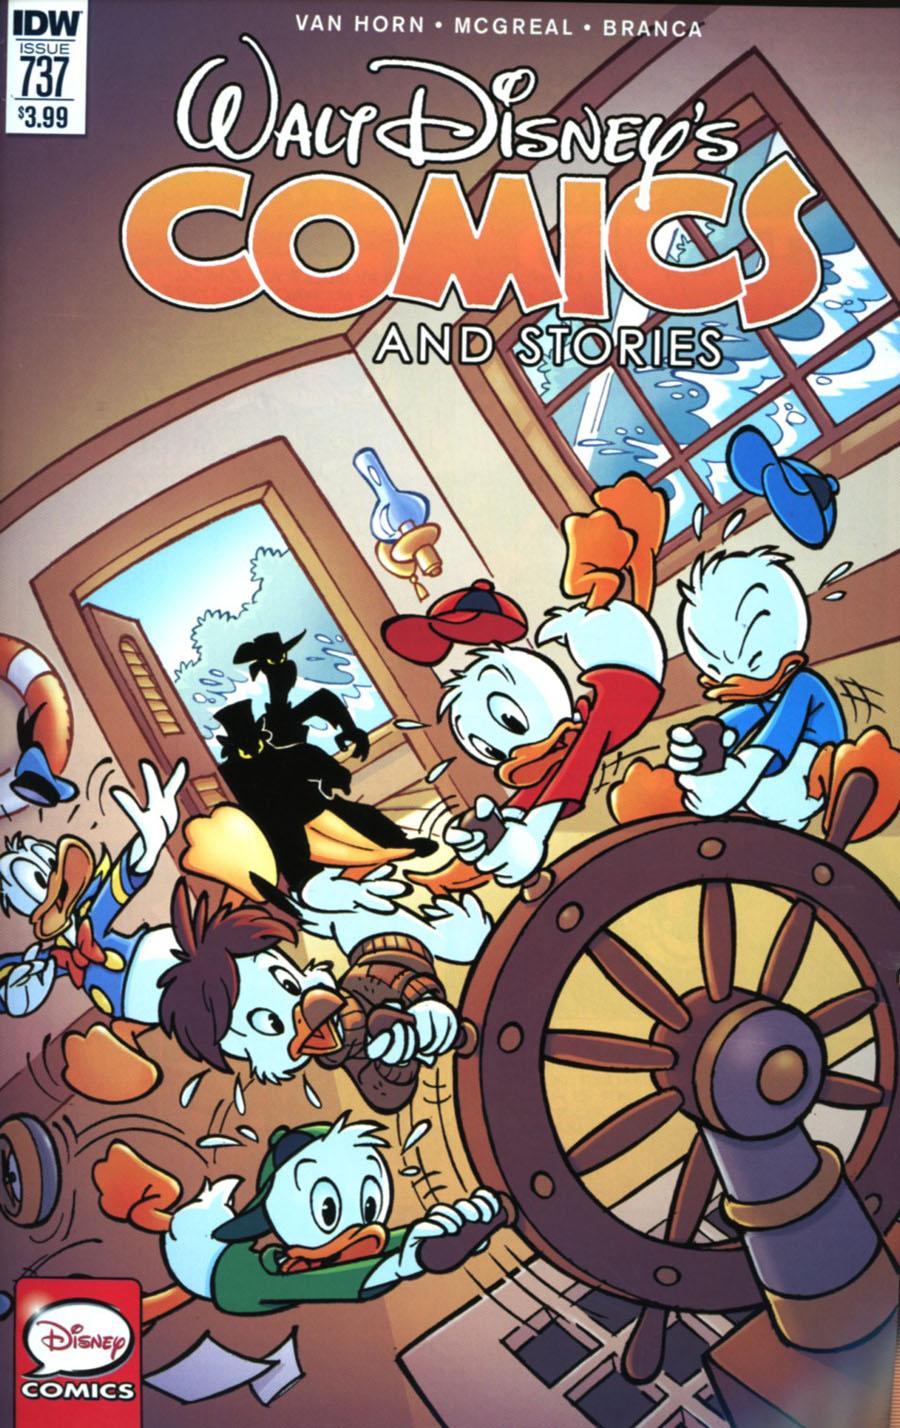 Walt Disneys Comics & Stories Vol. 1 #737